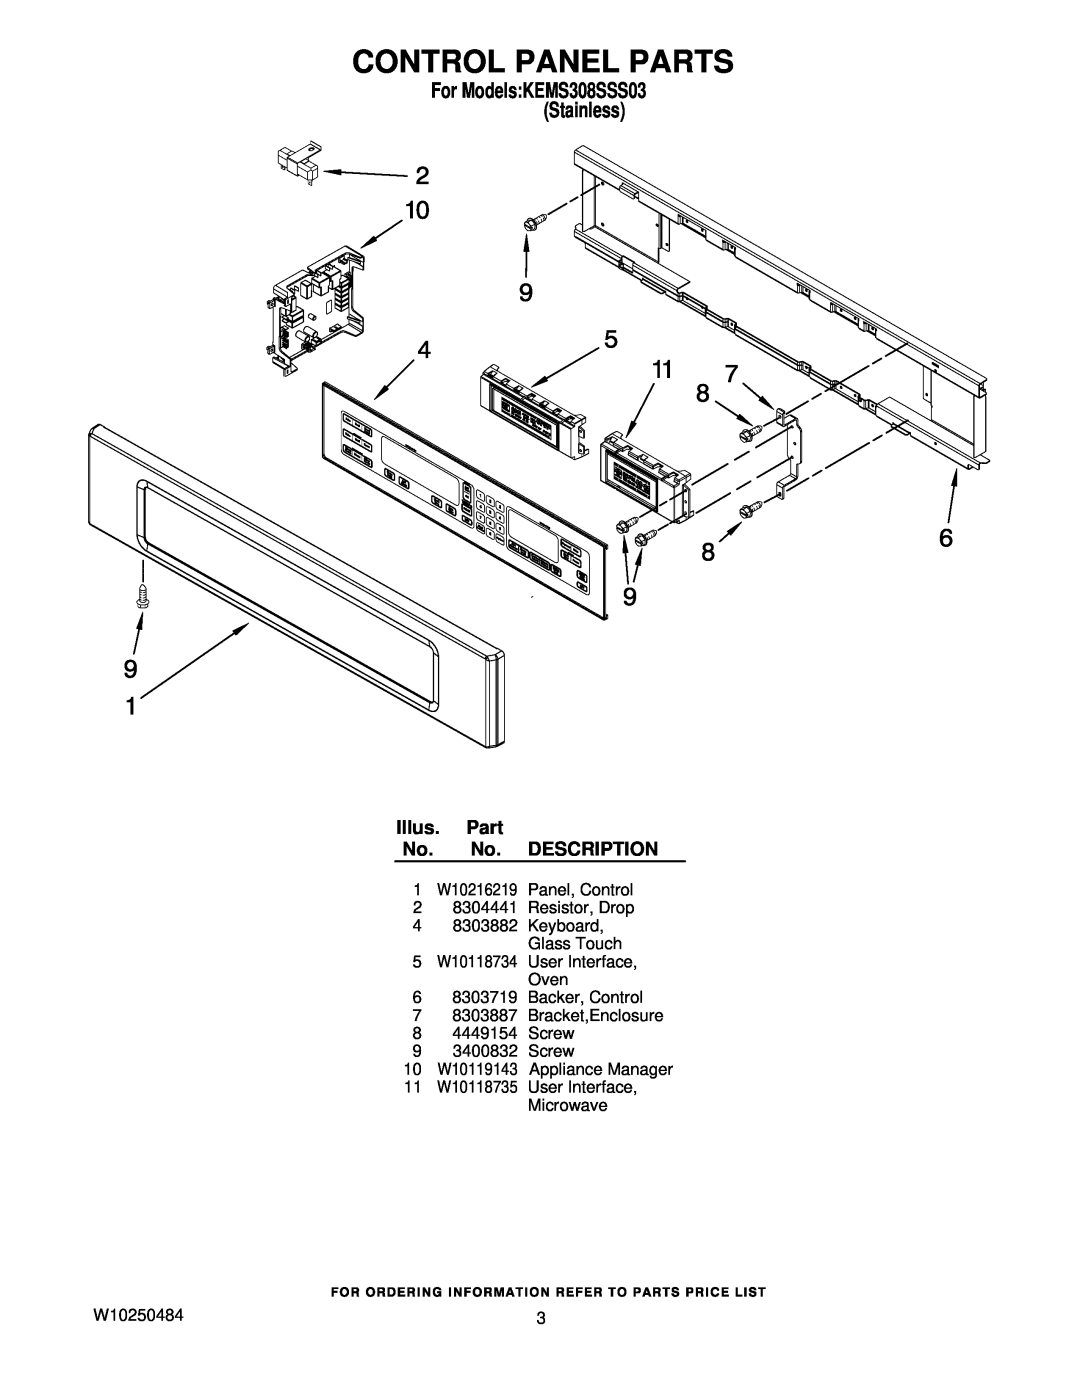 KitchenAid manual Control Panel Parts, Illus. Part No. No. DESCRIPTION, W10250484, For ModelsKEMS308SSS03 Stainless 